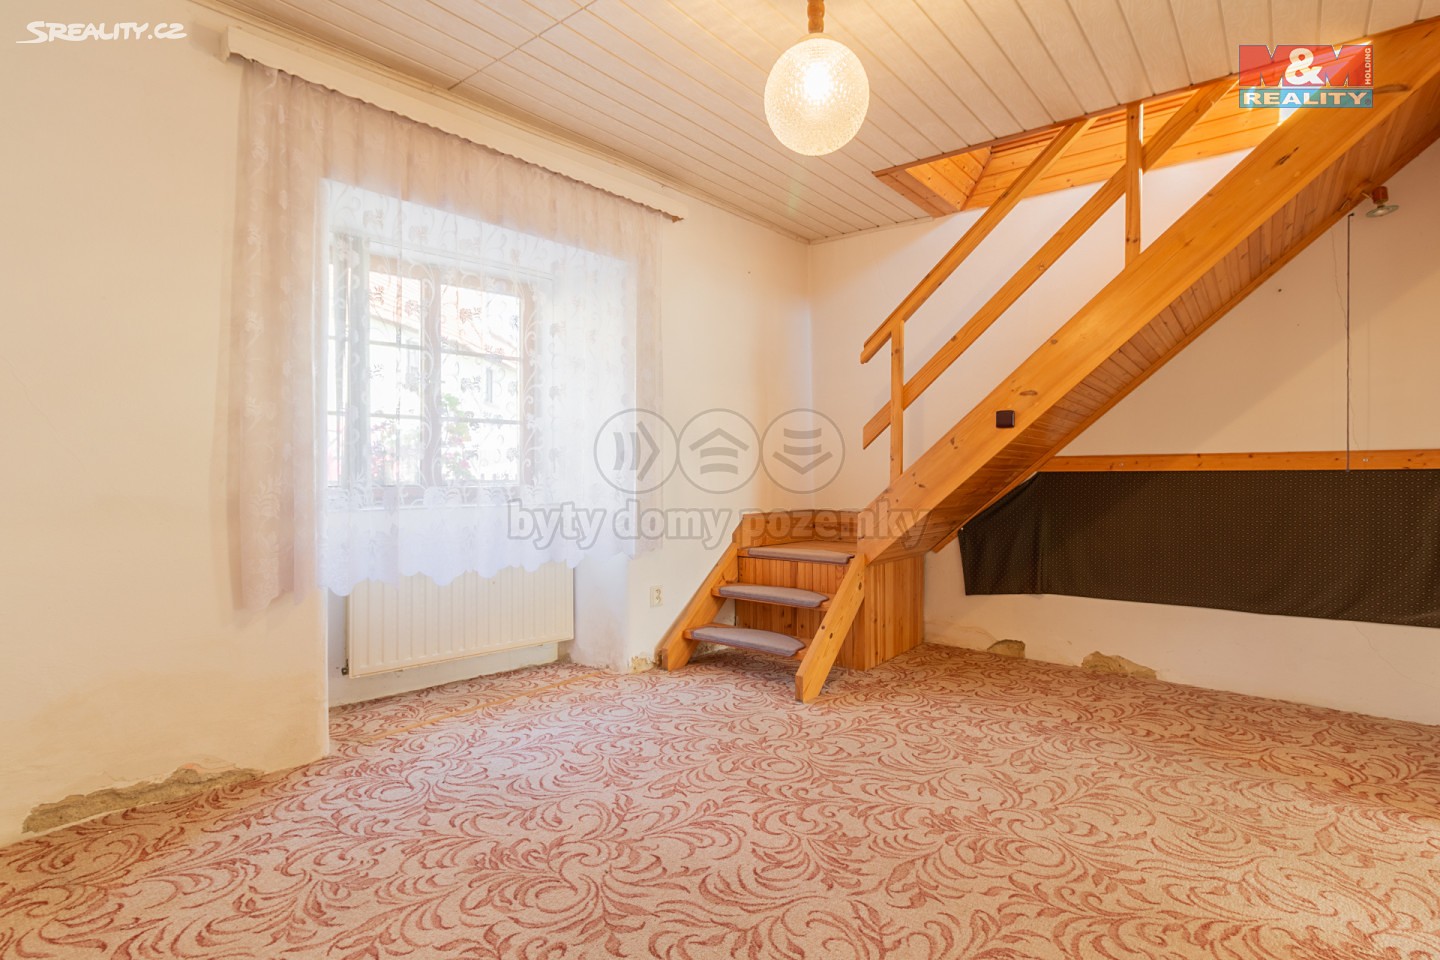 Prodej  rodinného domu 393 m², pozemek 393 m², Bavorov, okres Strakonice